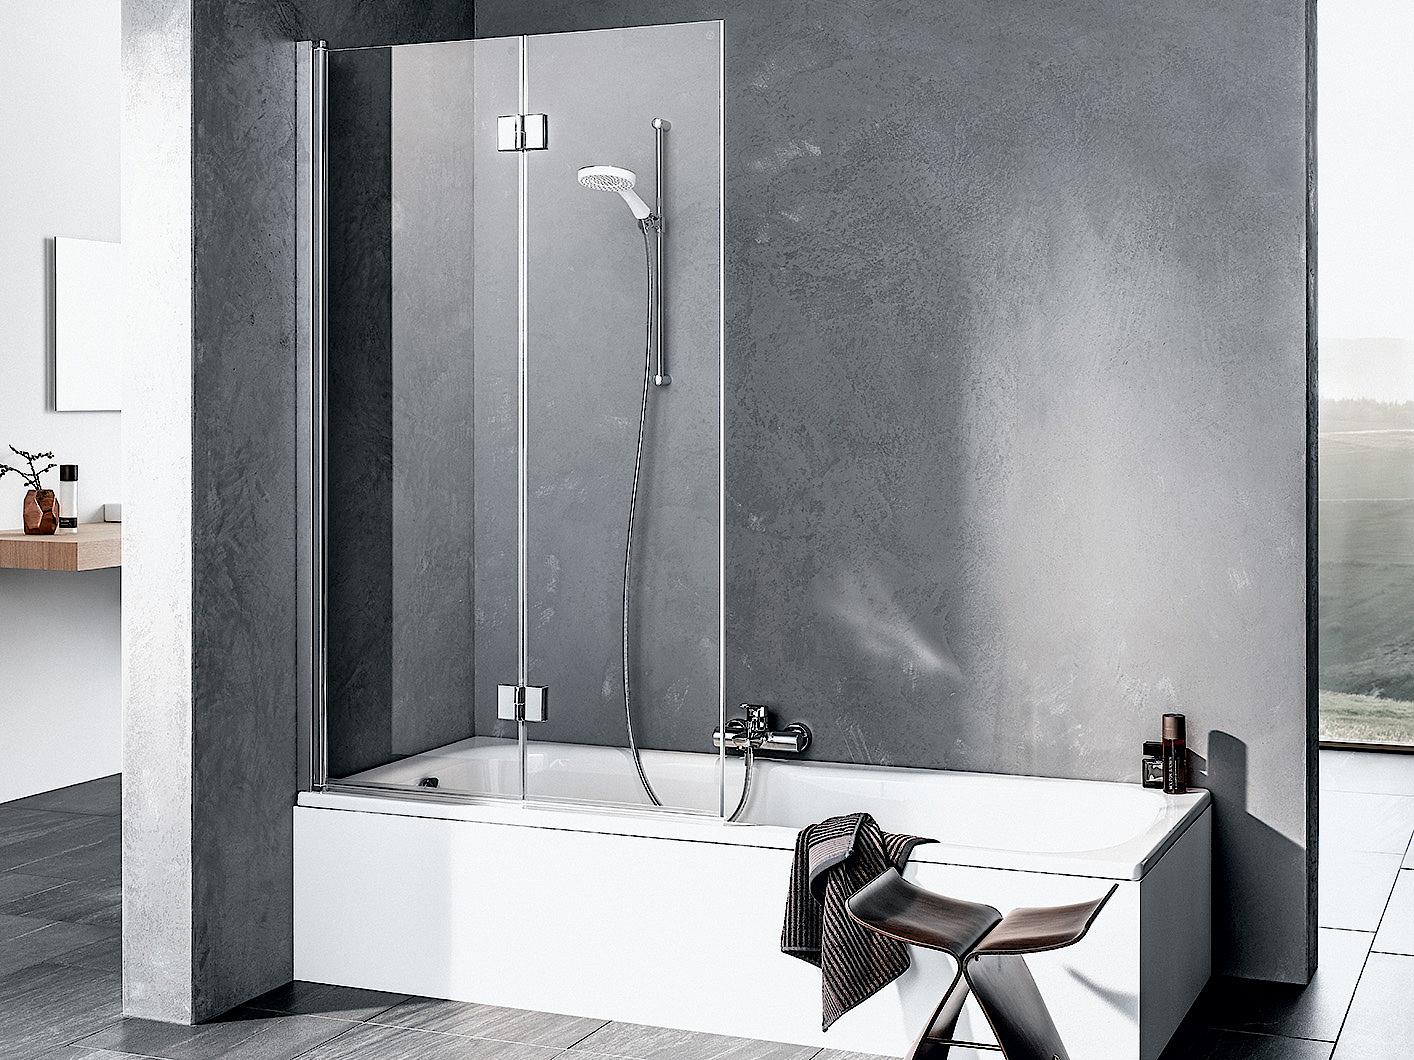 Kermi profile shower enclosure, LIGA two-panel folding screen on bathtub